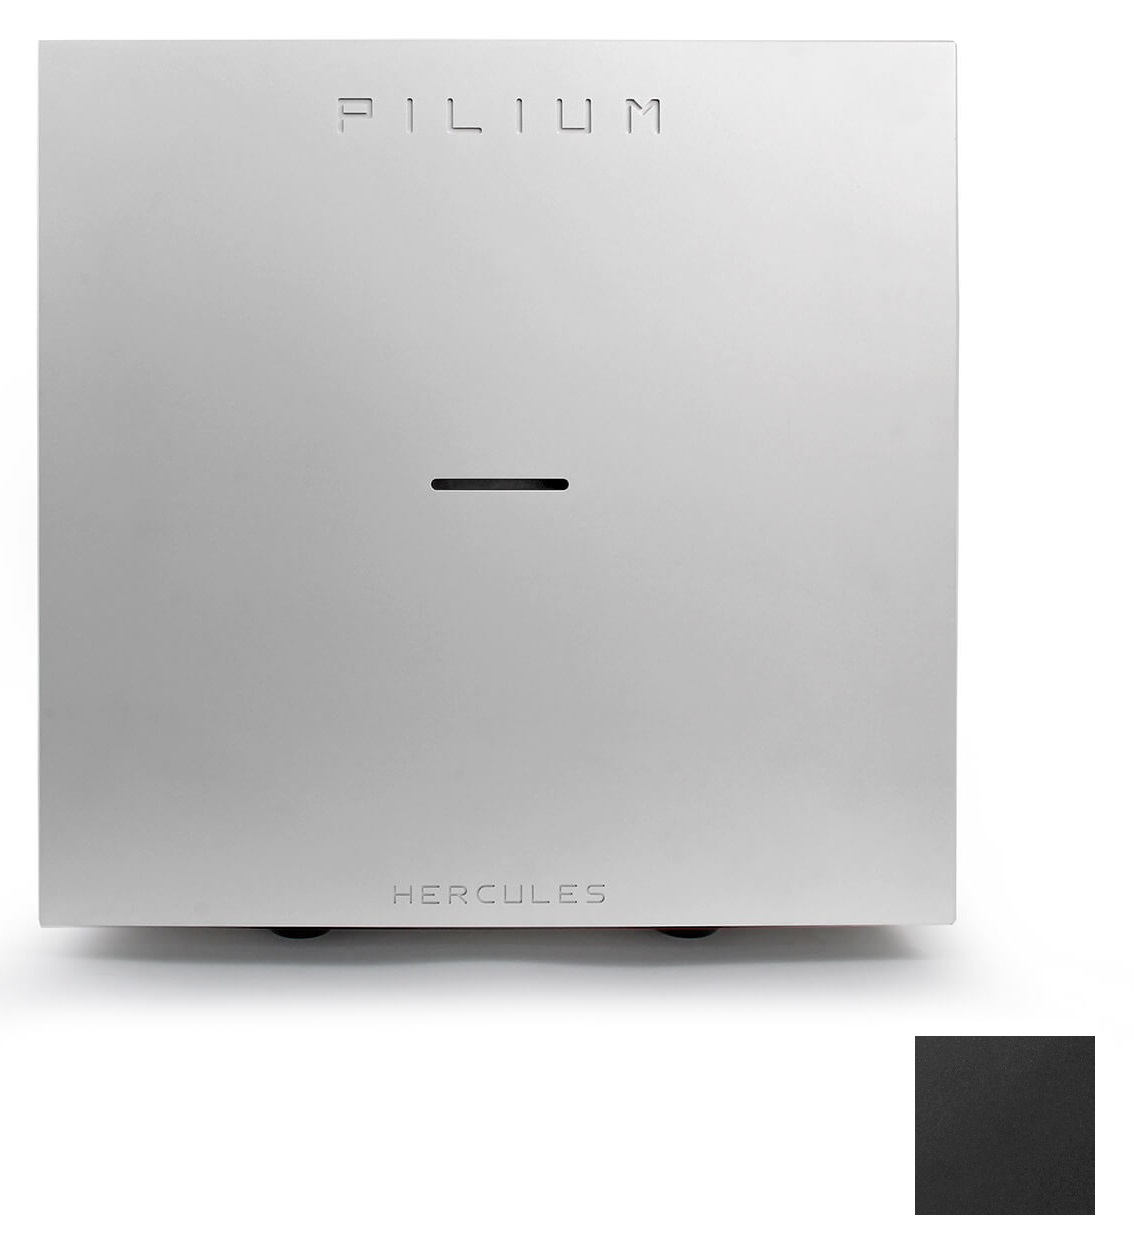 Усилители мощности Pilium Hercules Black 8 slice extra wide convection countertop toaster oven includes bake pan broil rack